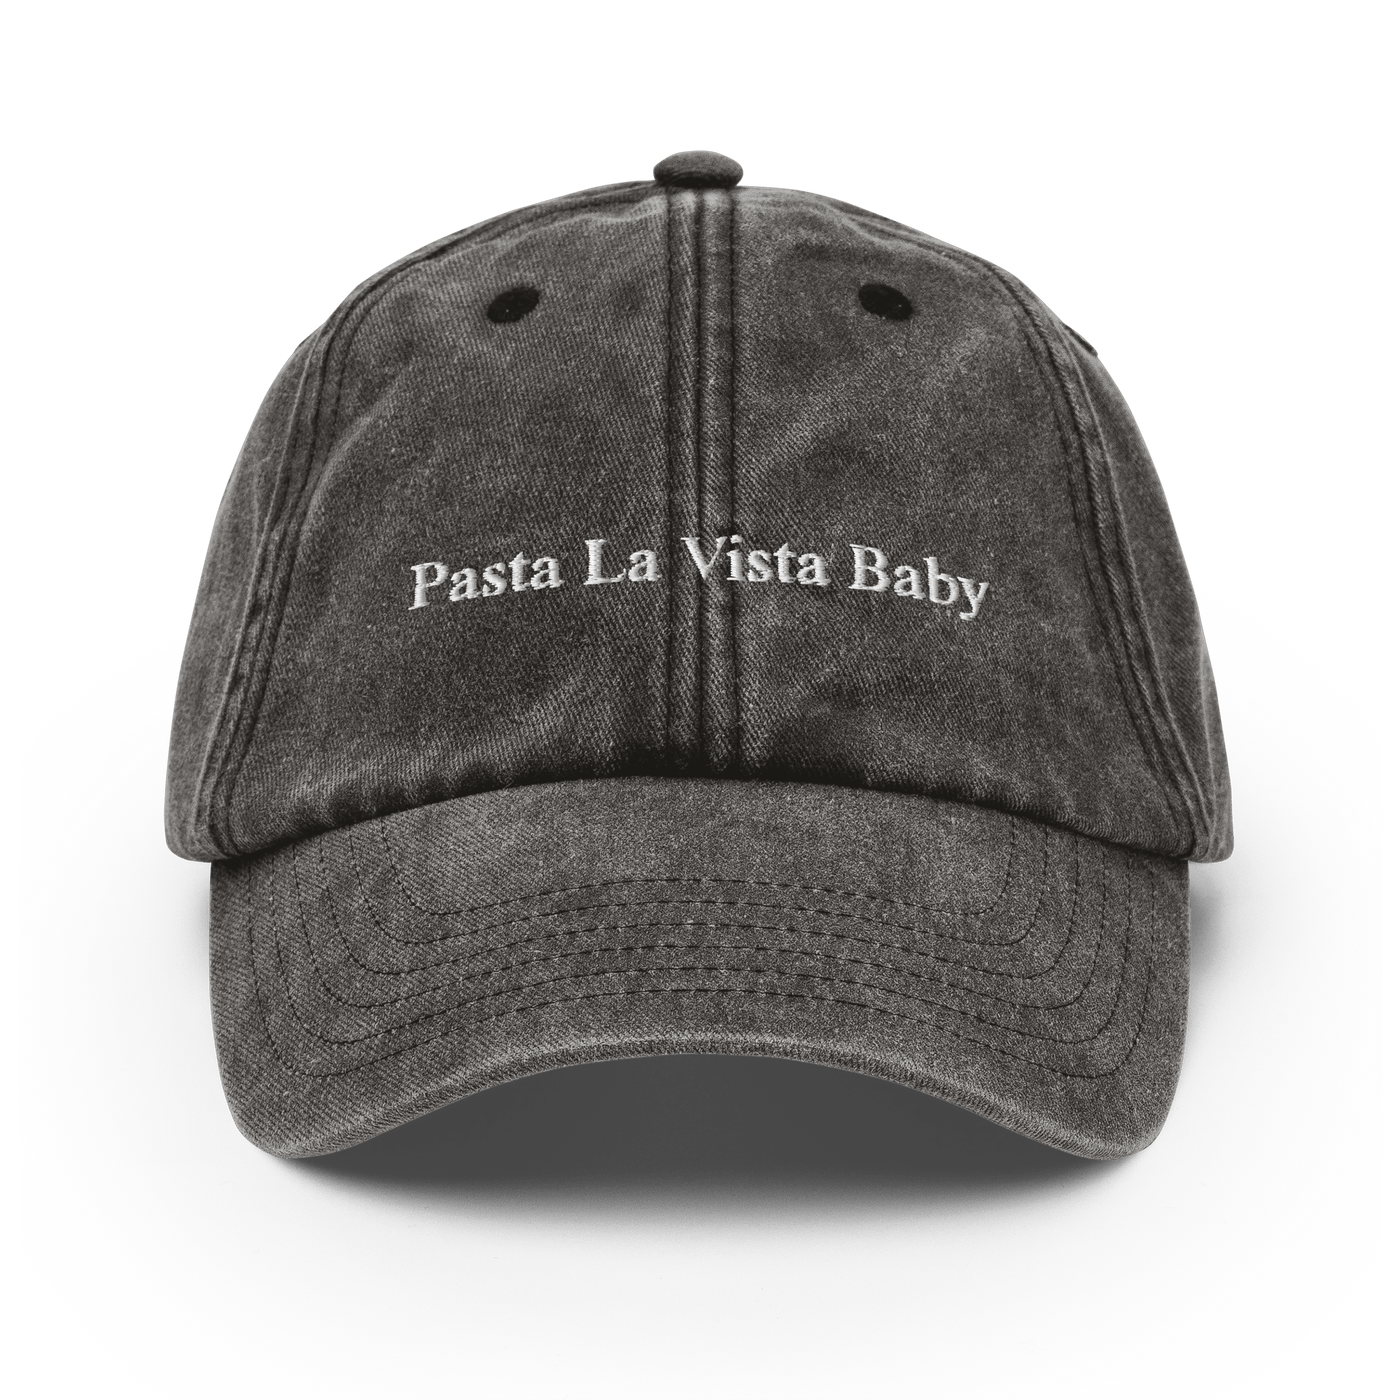 Pasta La Vista Baby Vintage Hat - Vintage Black - - Just Another Cap Store